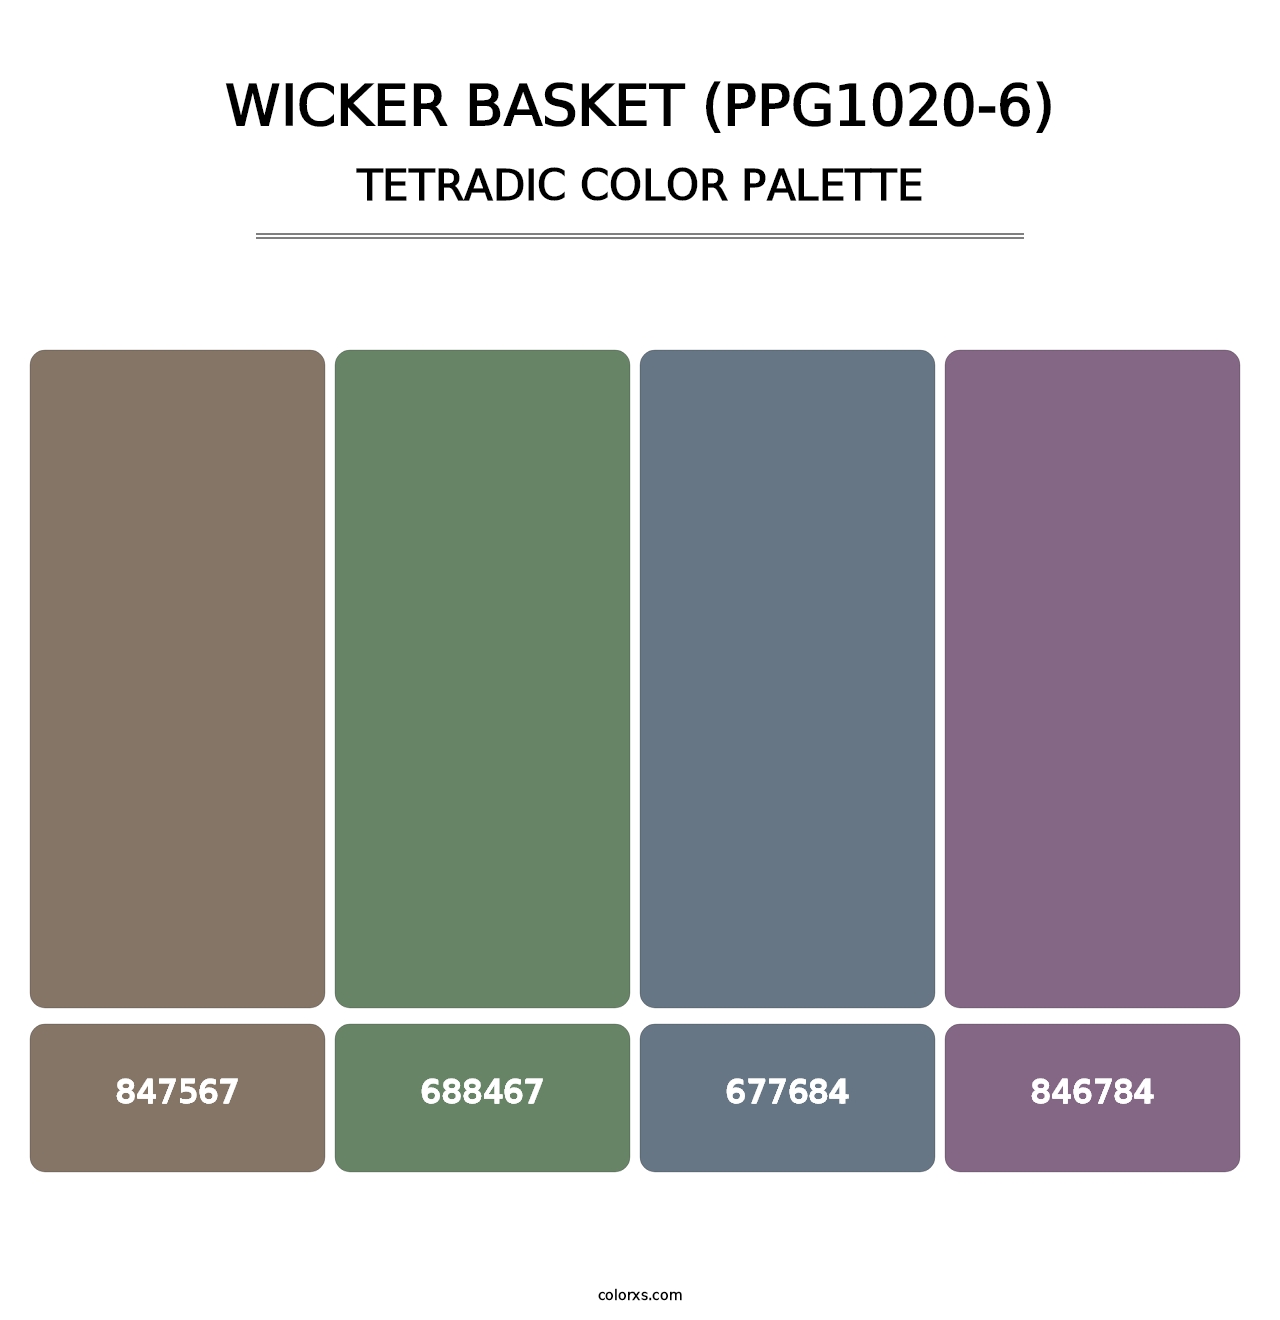 Wicker Basket (PPG1020-6) - Tetradic Color Palette